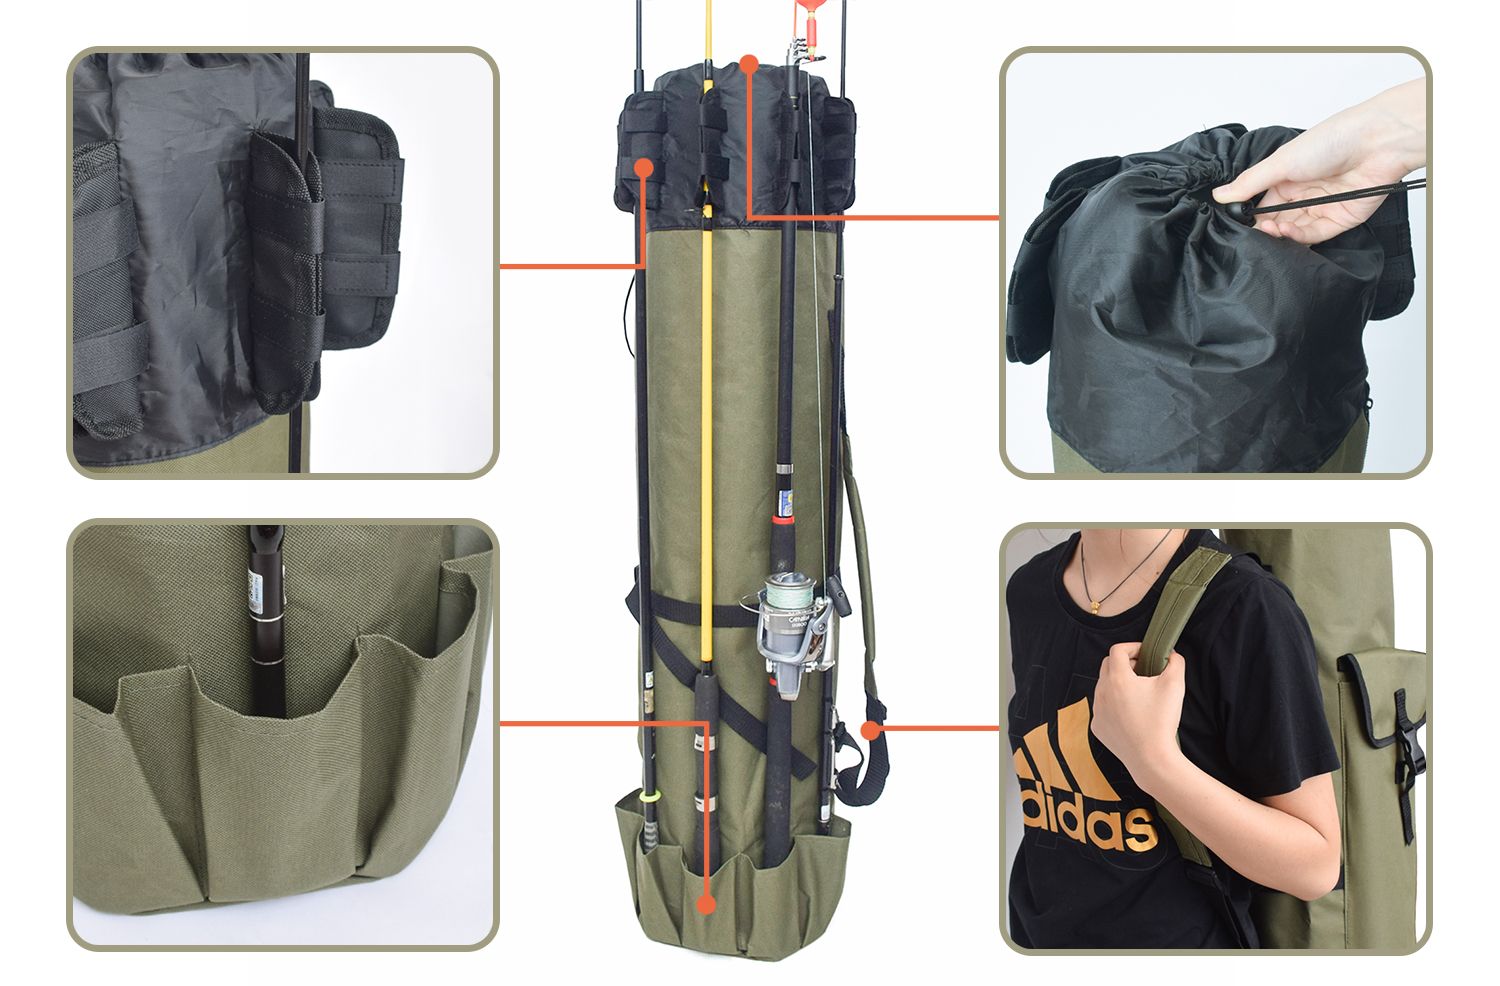 MSDFR-1 Fishing rod bag size details2